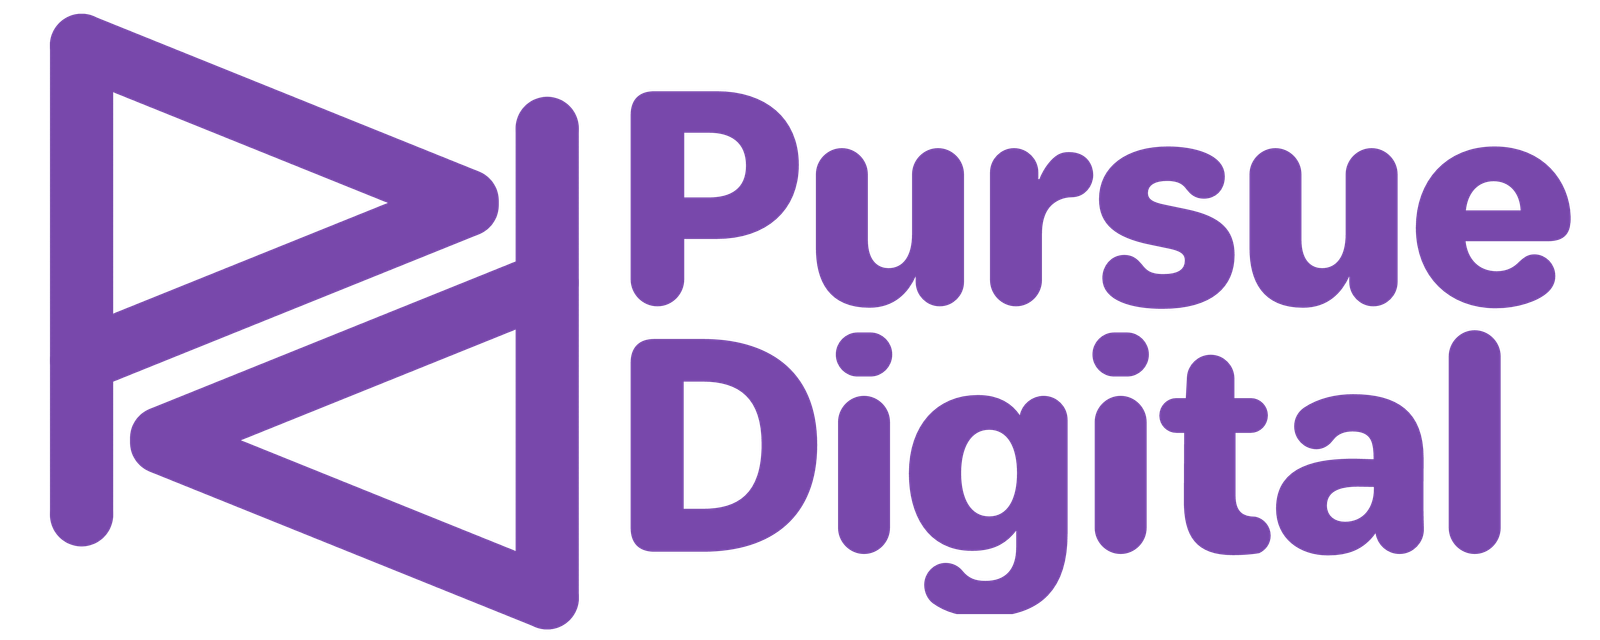 Pursue Digital Marketing